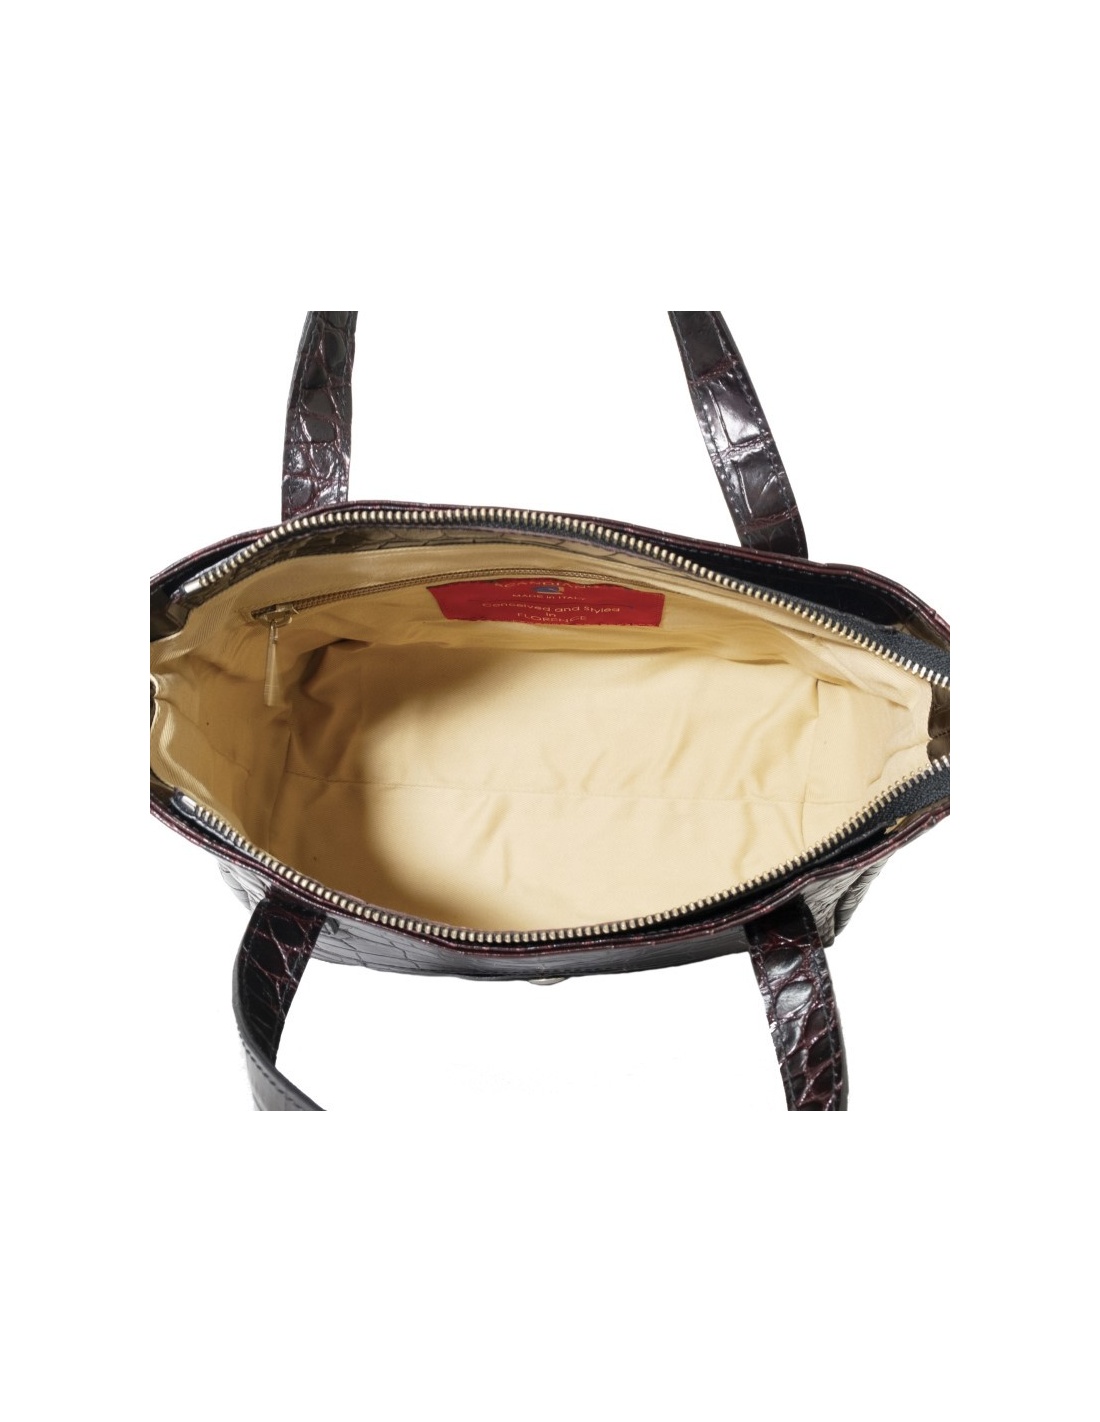 Italy LP rare leather handbag for women all hand-made crocodile